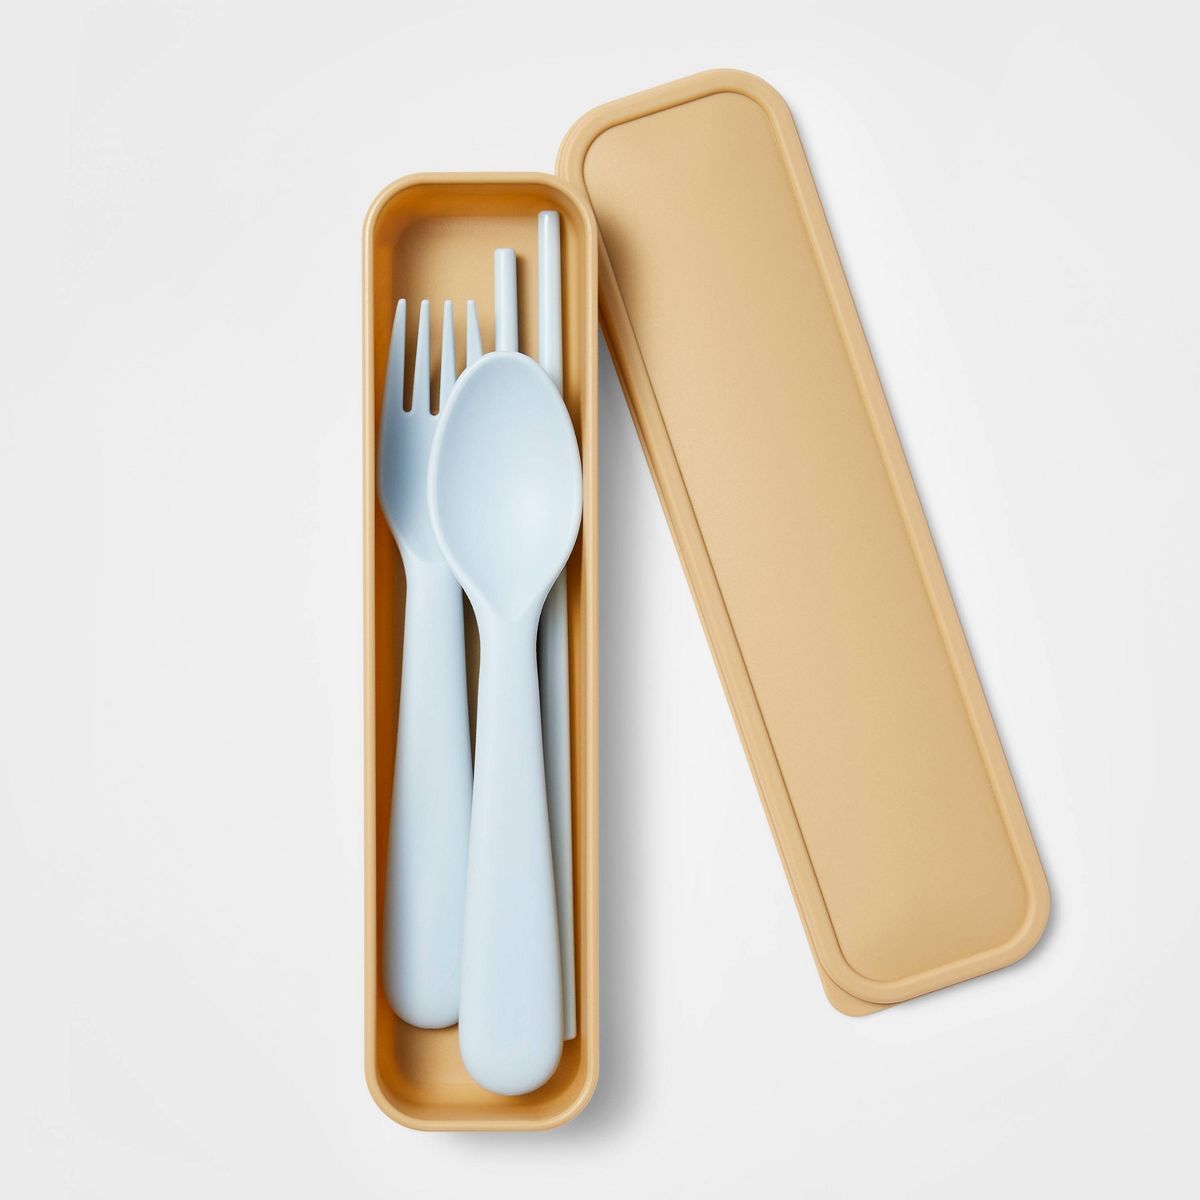 Cutlery Set Beige/Blue - Cat & Jack™ | Target